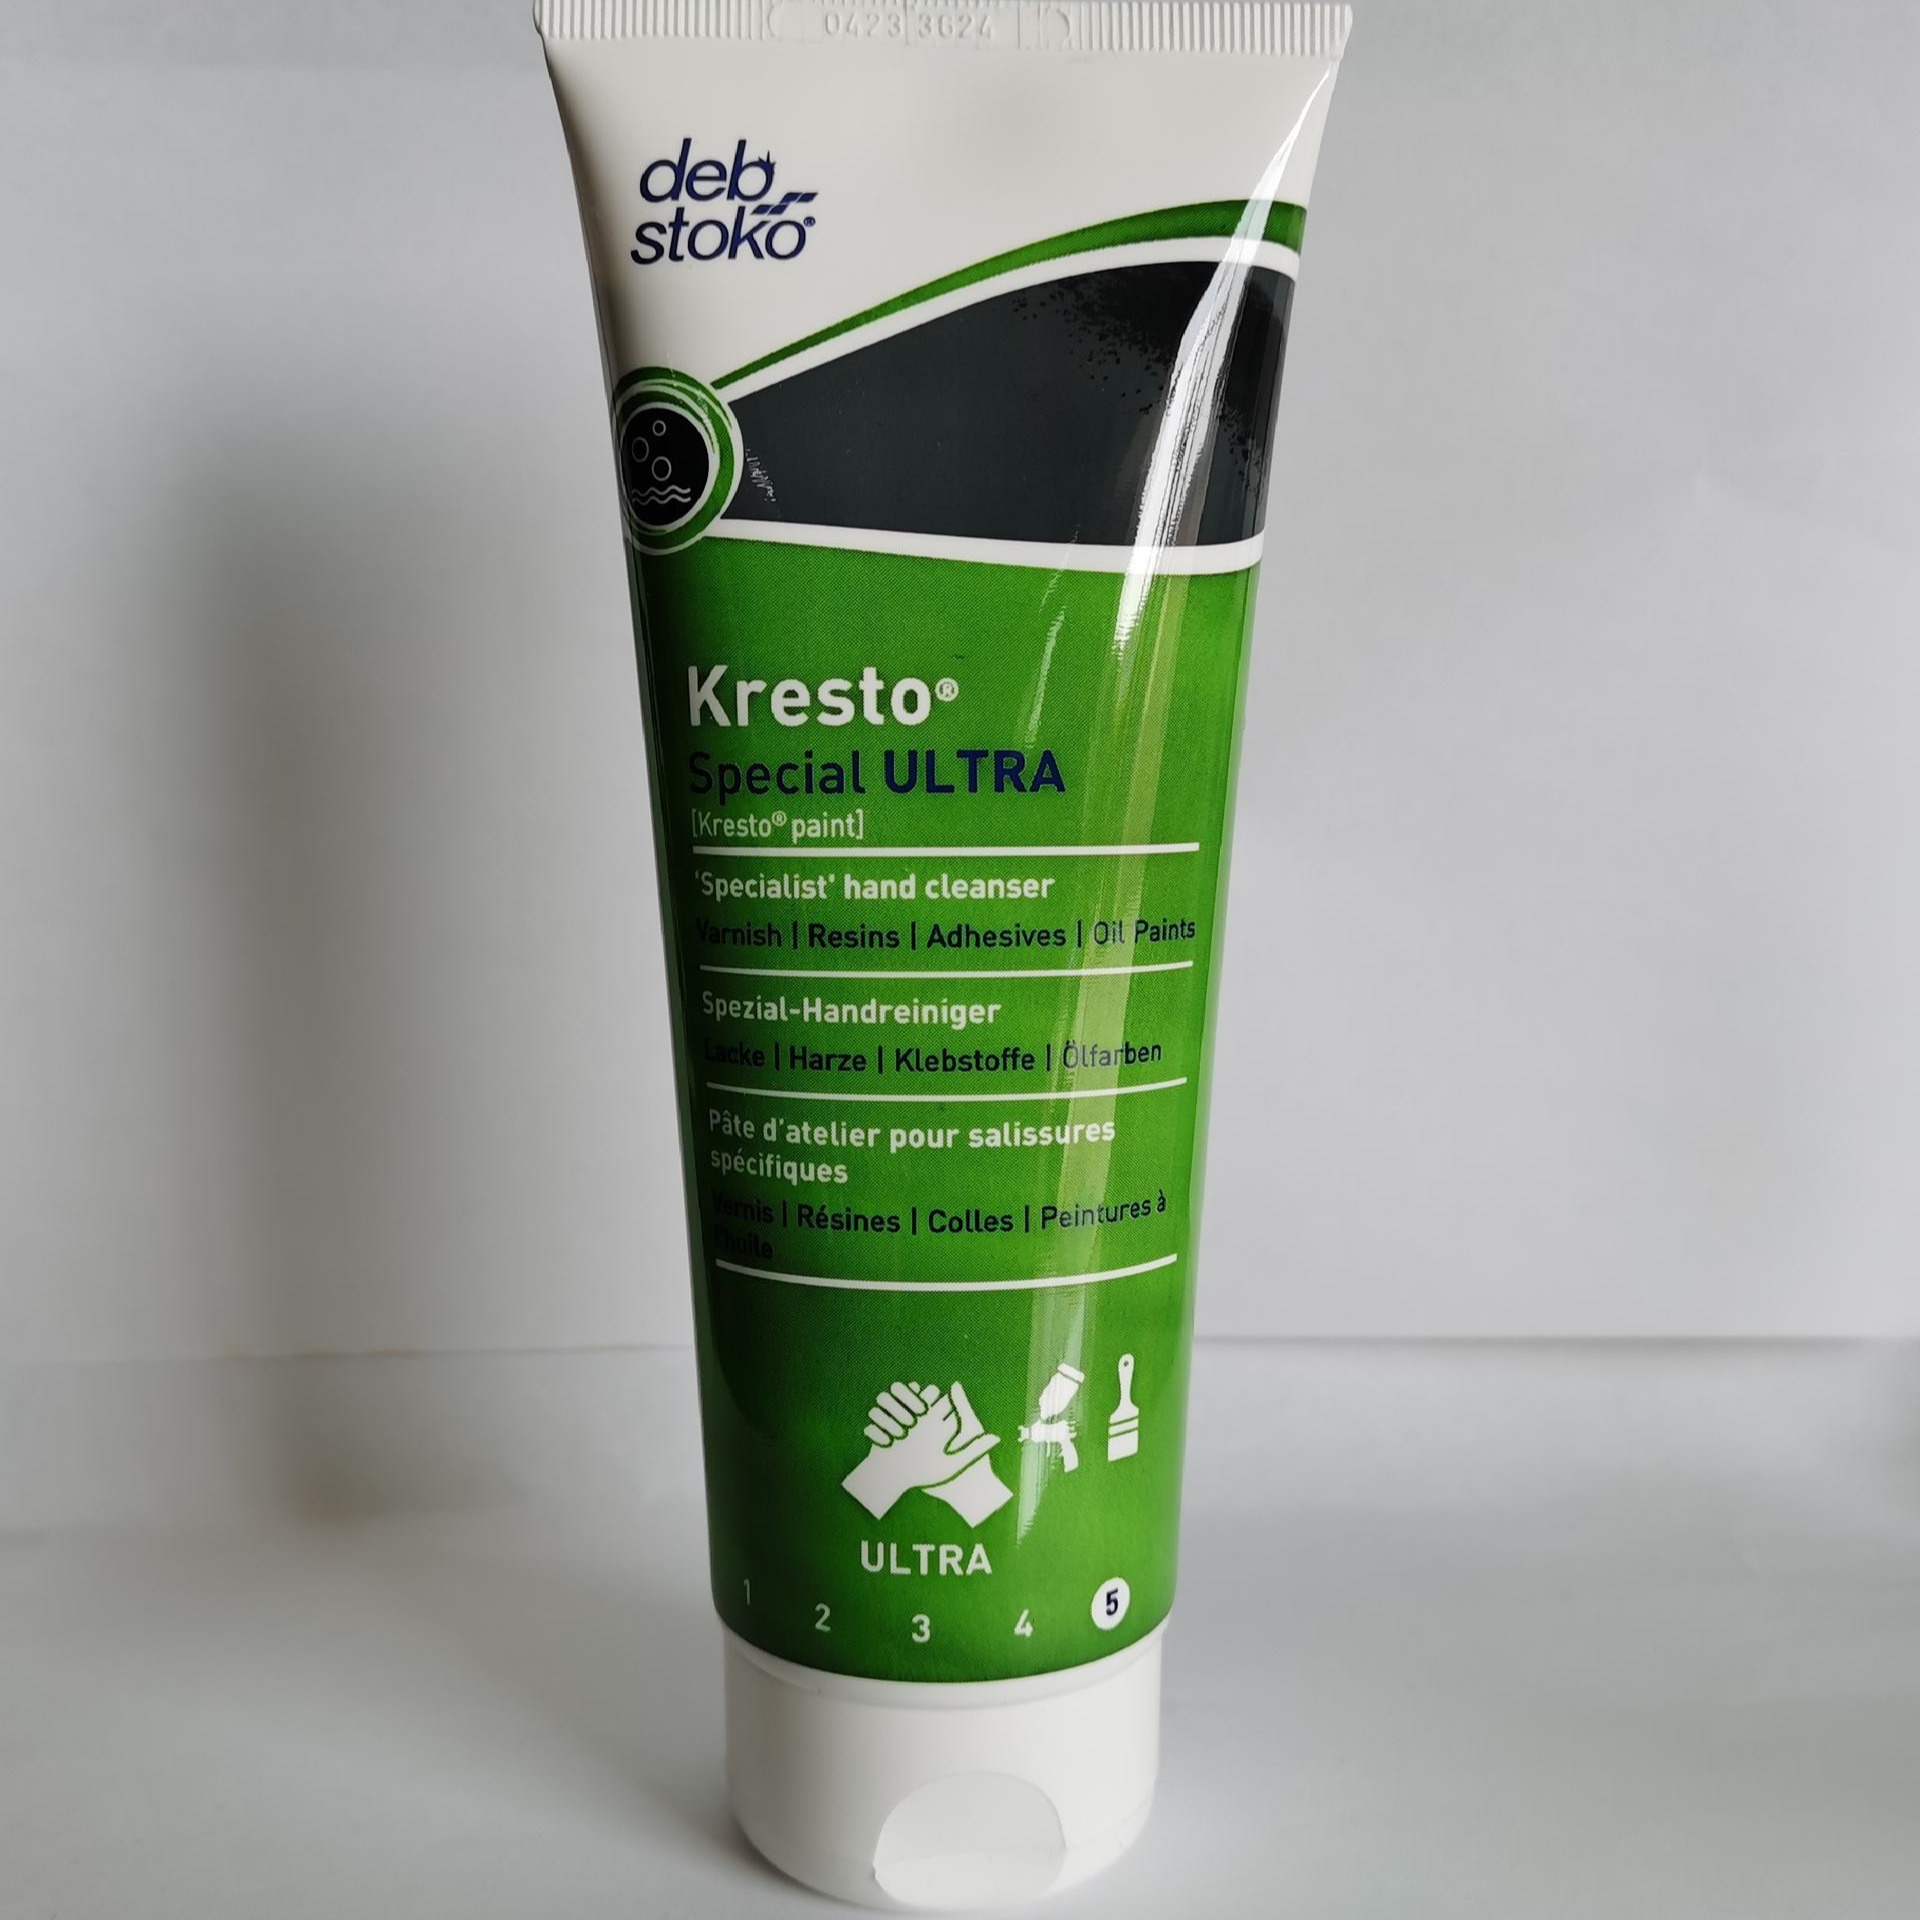 STOKO 牌KRESTO special ULTRA 司力 250ML 去油漆洗手膏，无硅，去污力强，不伤手，环保